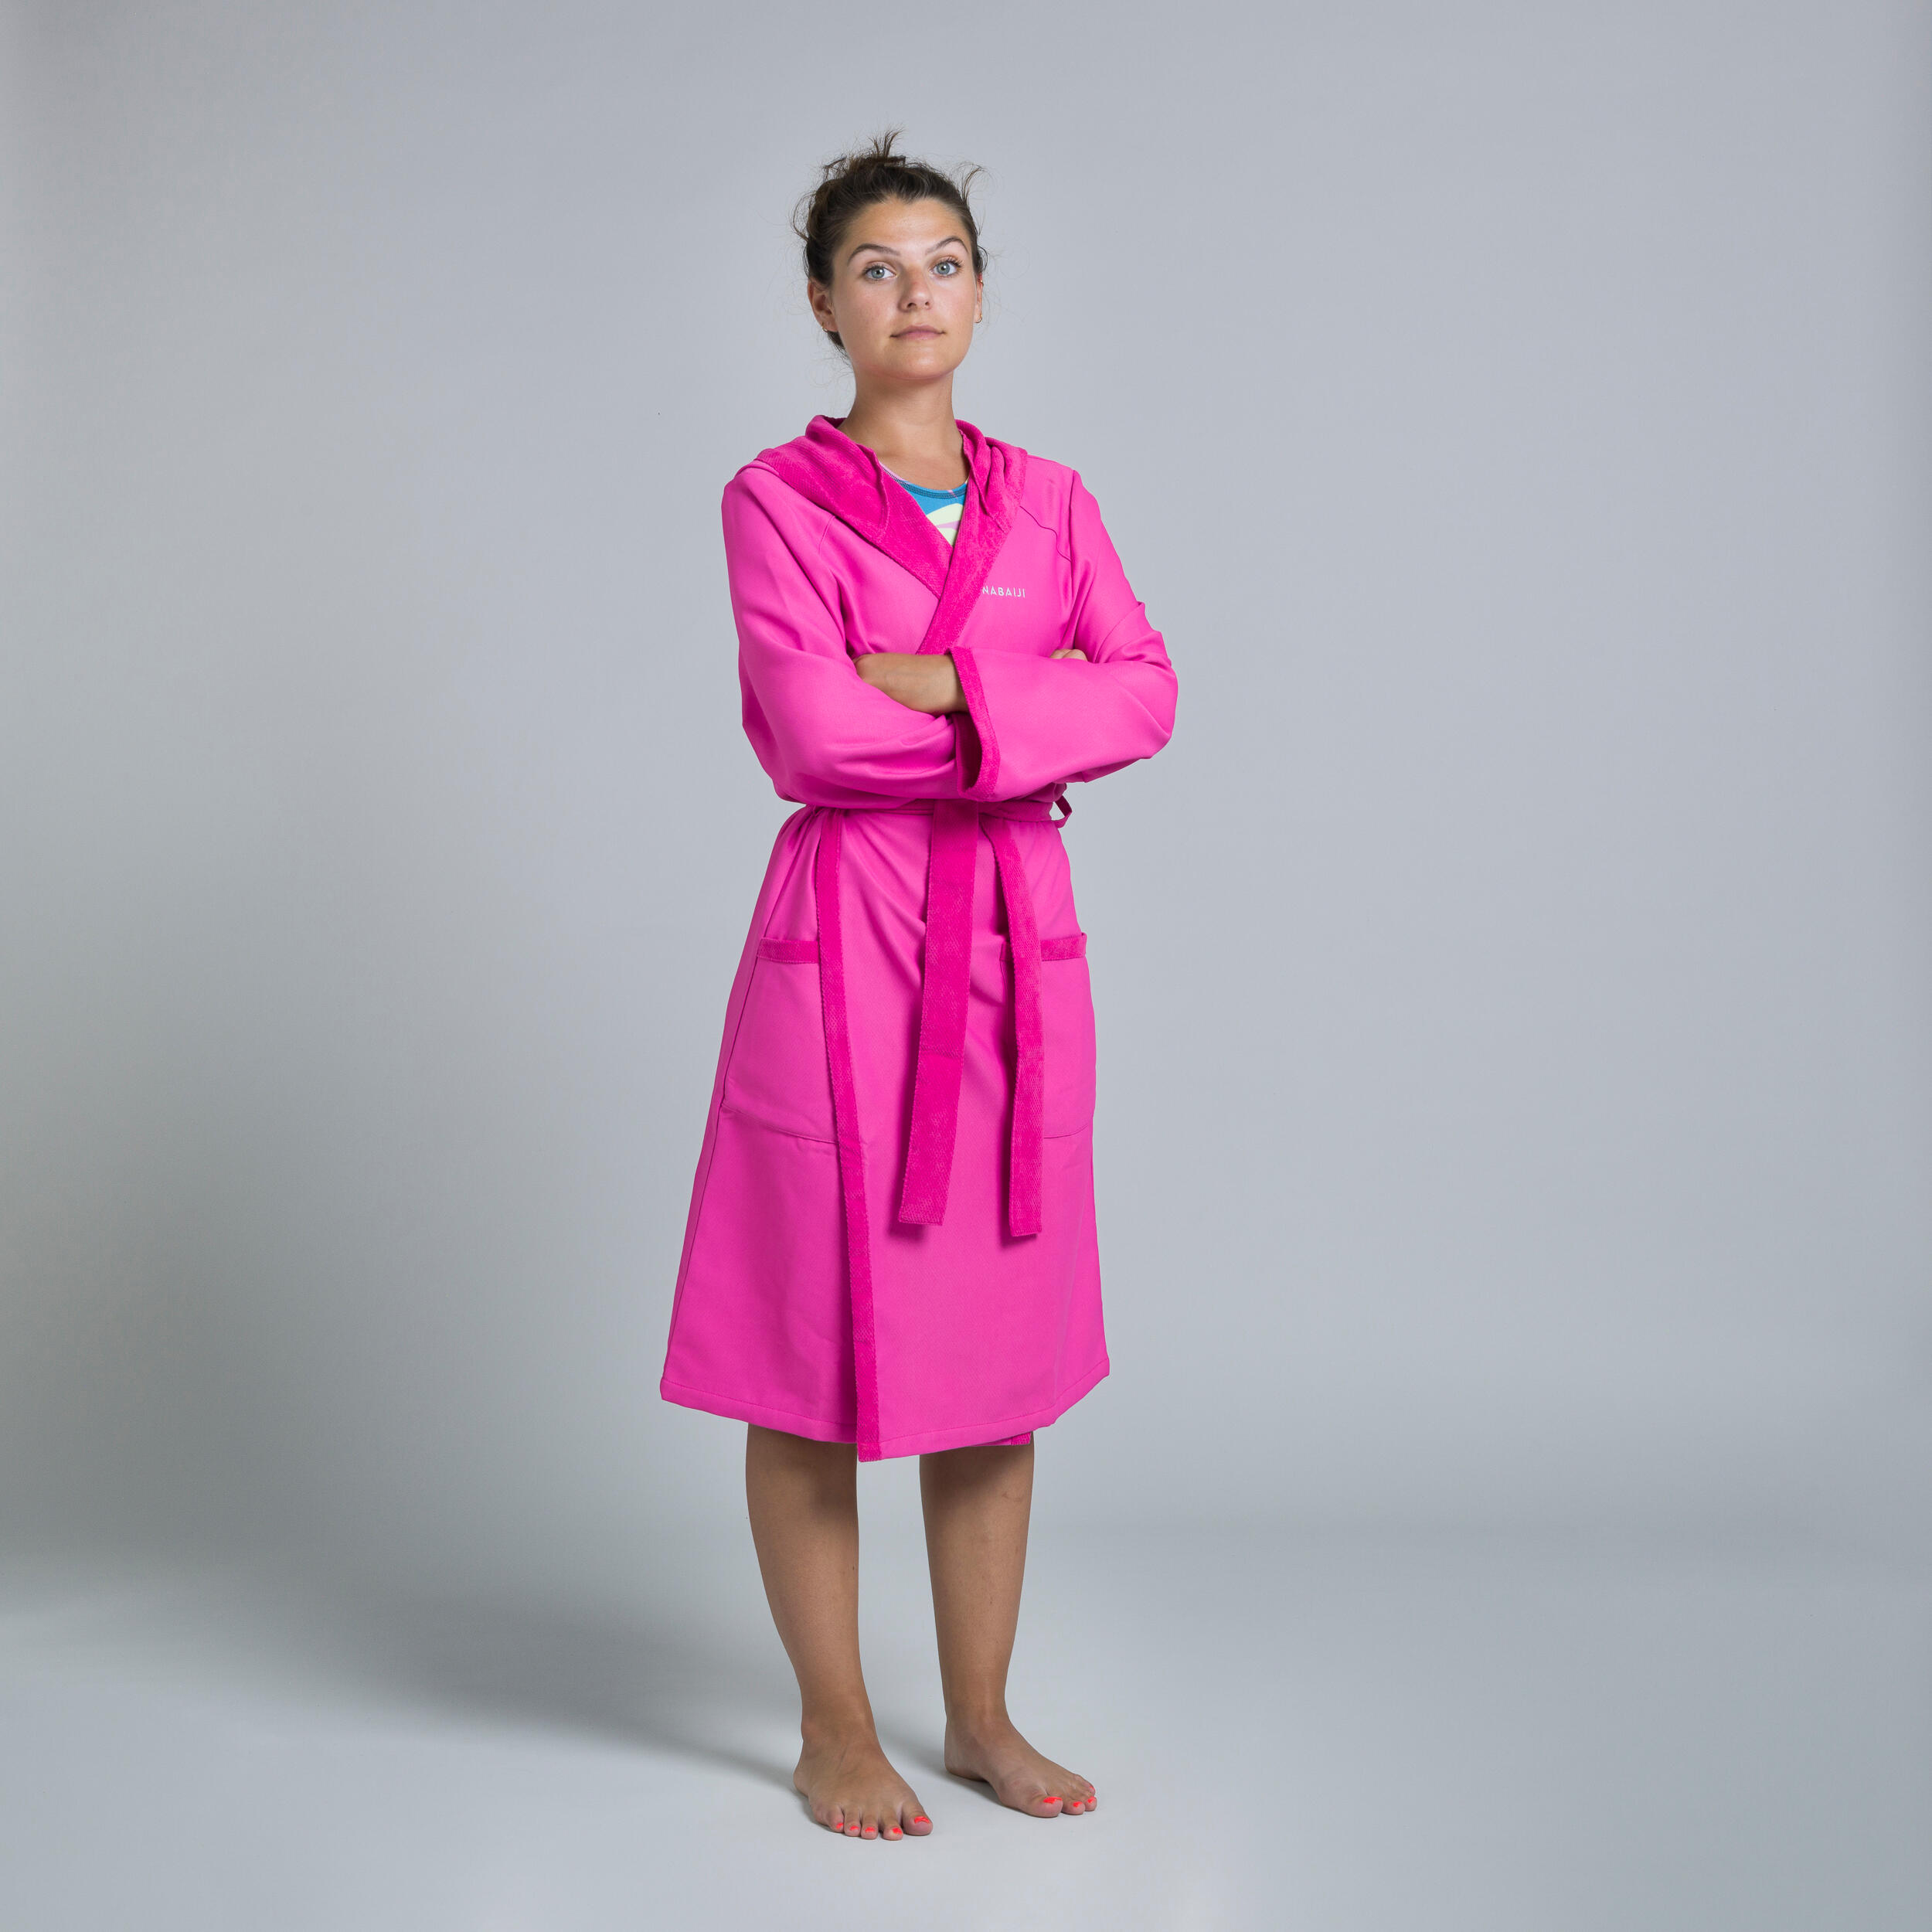 Women's Compact Bathrobe and Towel Set - Pink 2/8